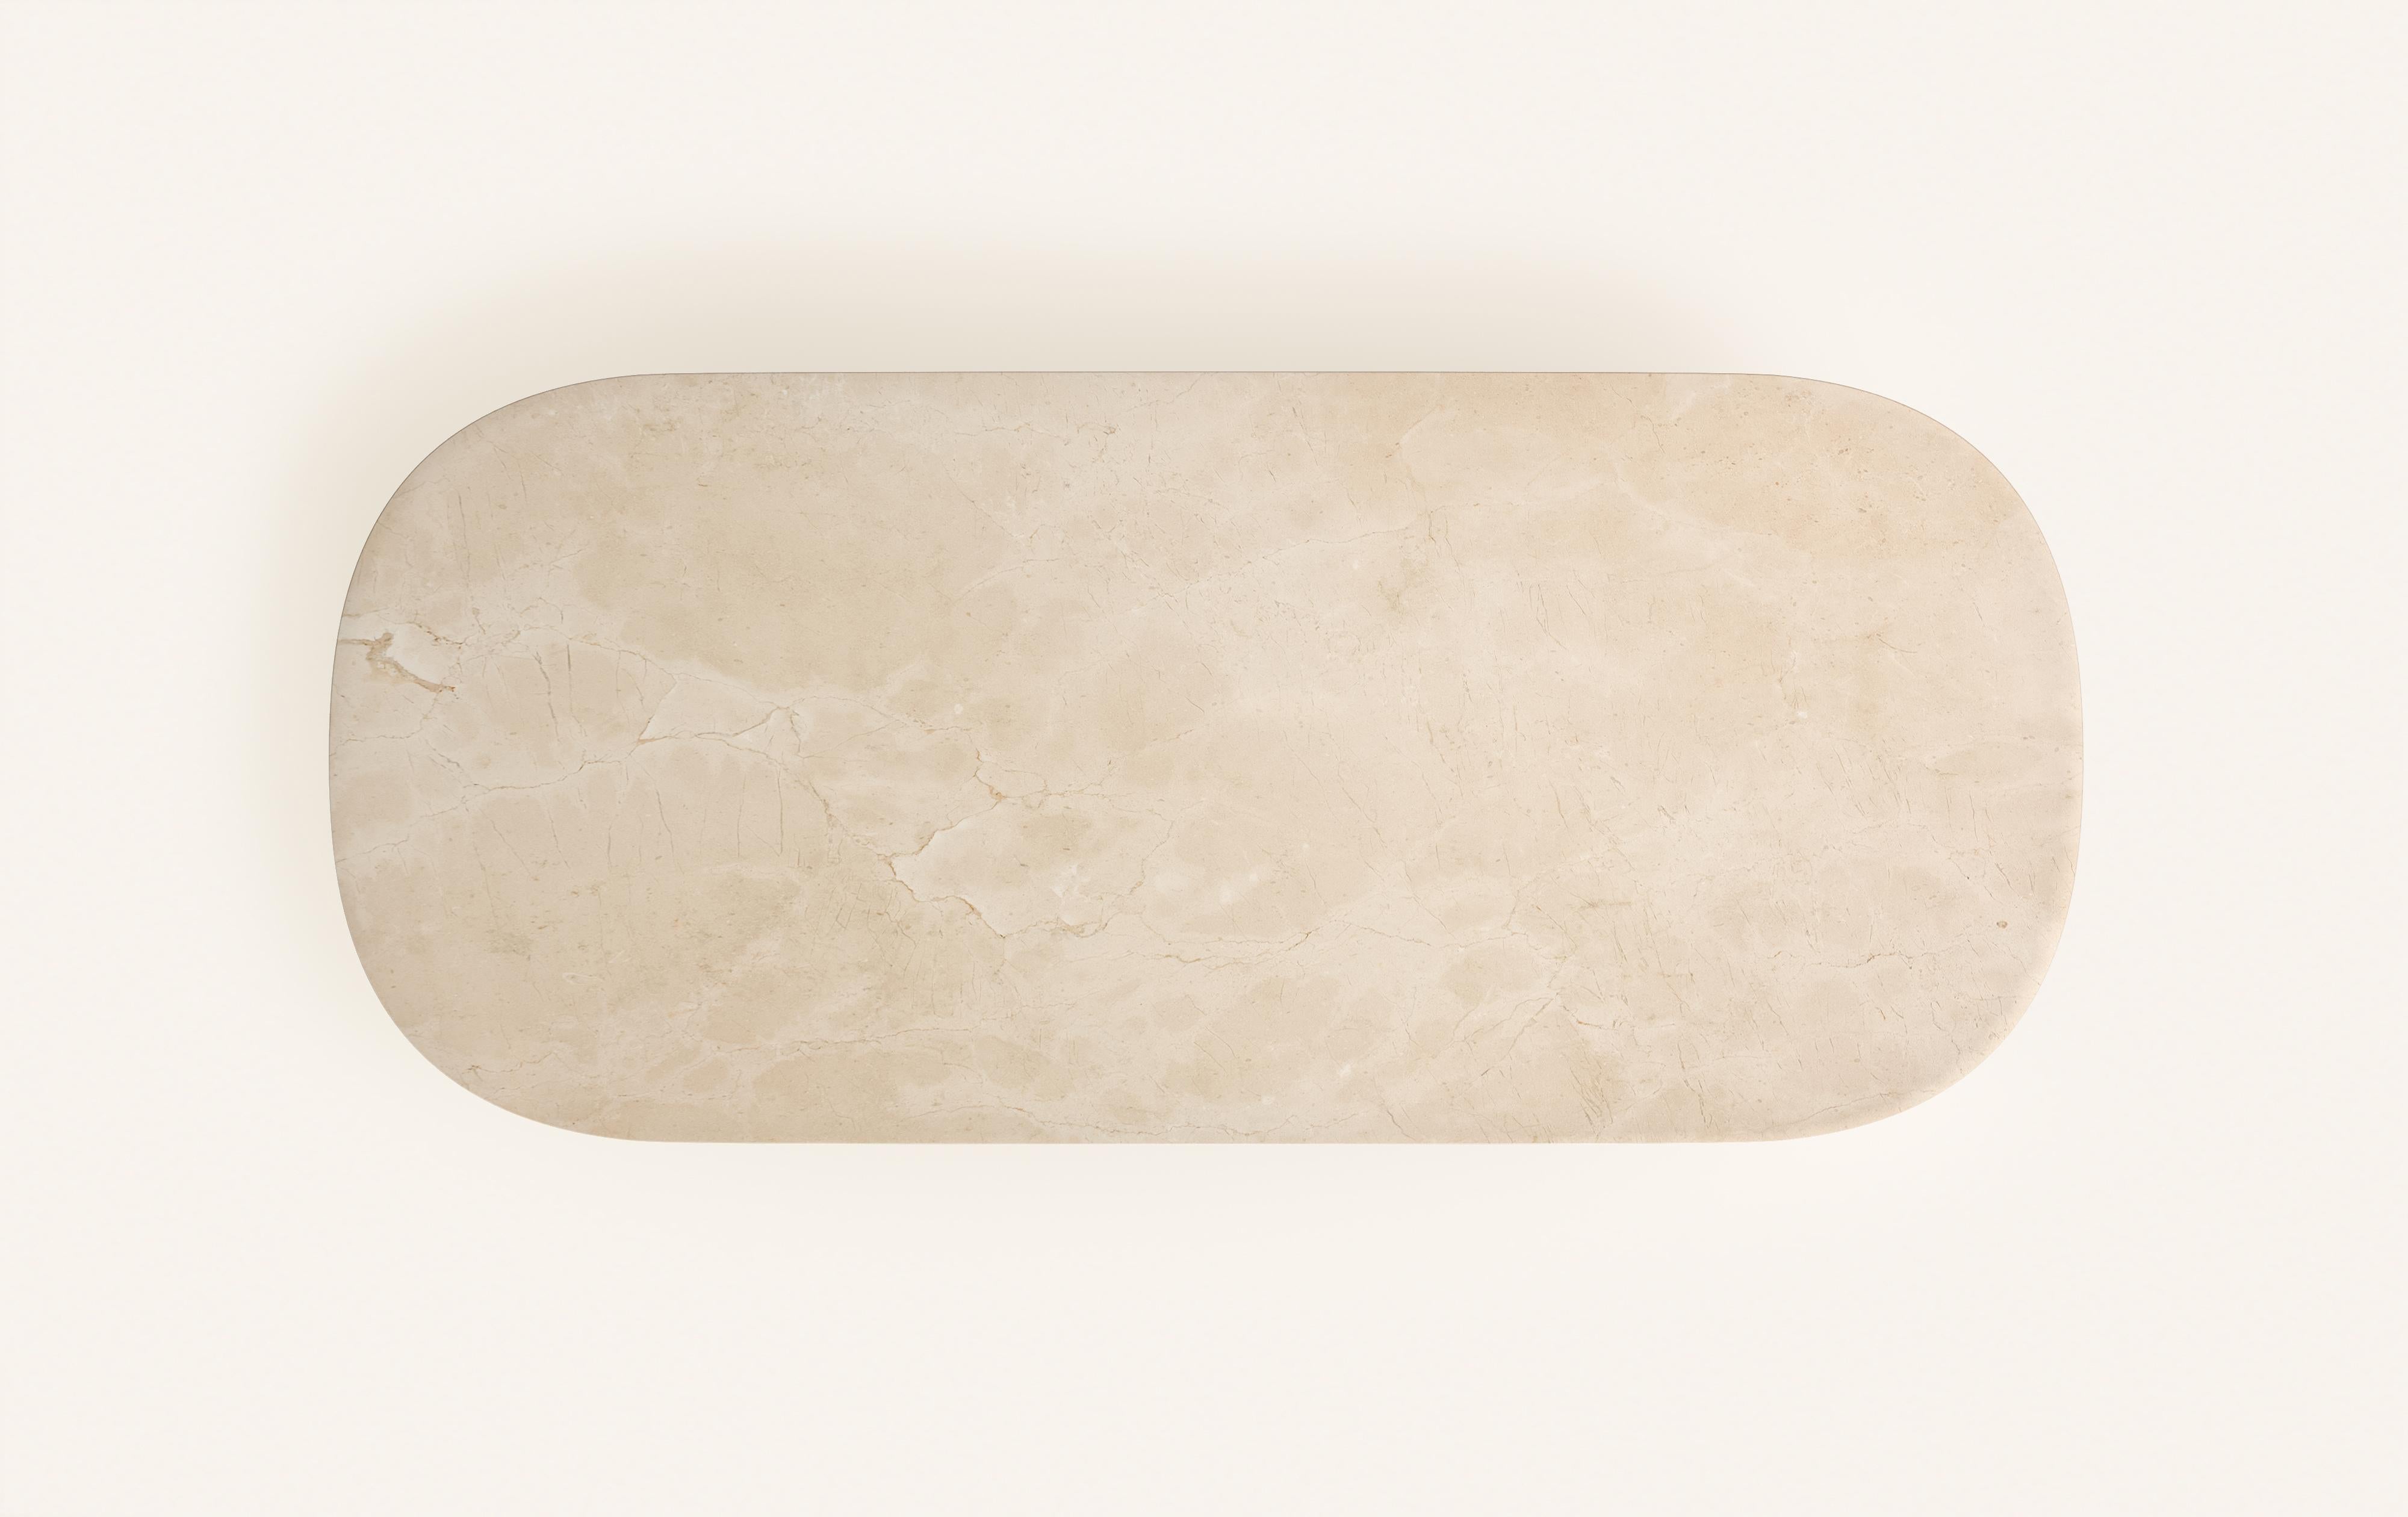 FORM(LA) Cono Oval Dining Table 108”L x 48”W x 30”H Crema Marfil Marble In New Condition For Sale In Los Angeles, CA